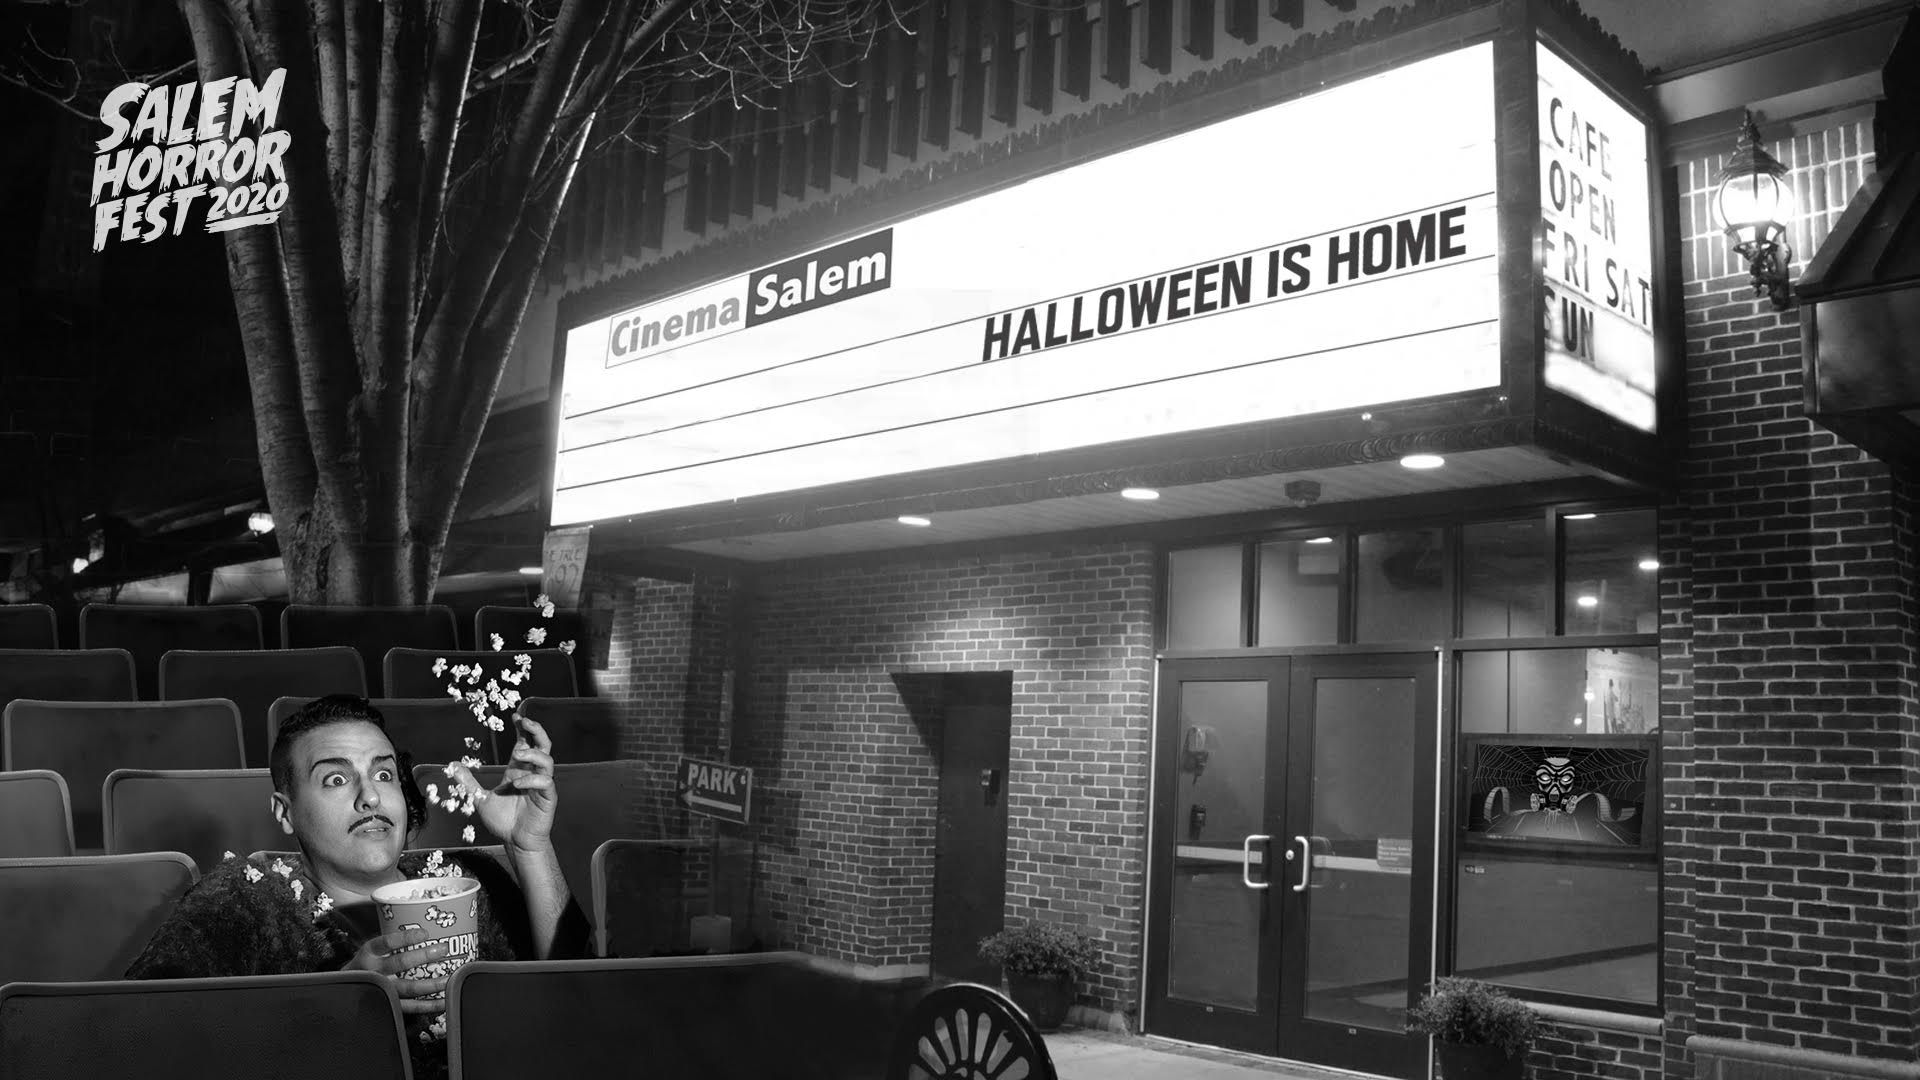 [News] Salem Horror Fest Commandeers Vacant Cinema for Halloween Marathon